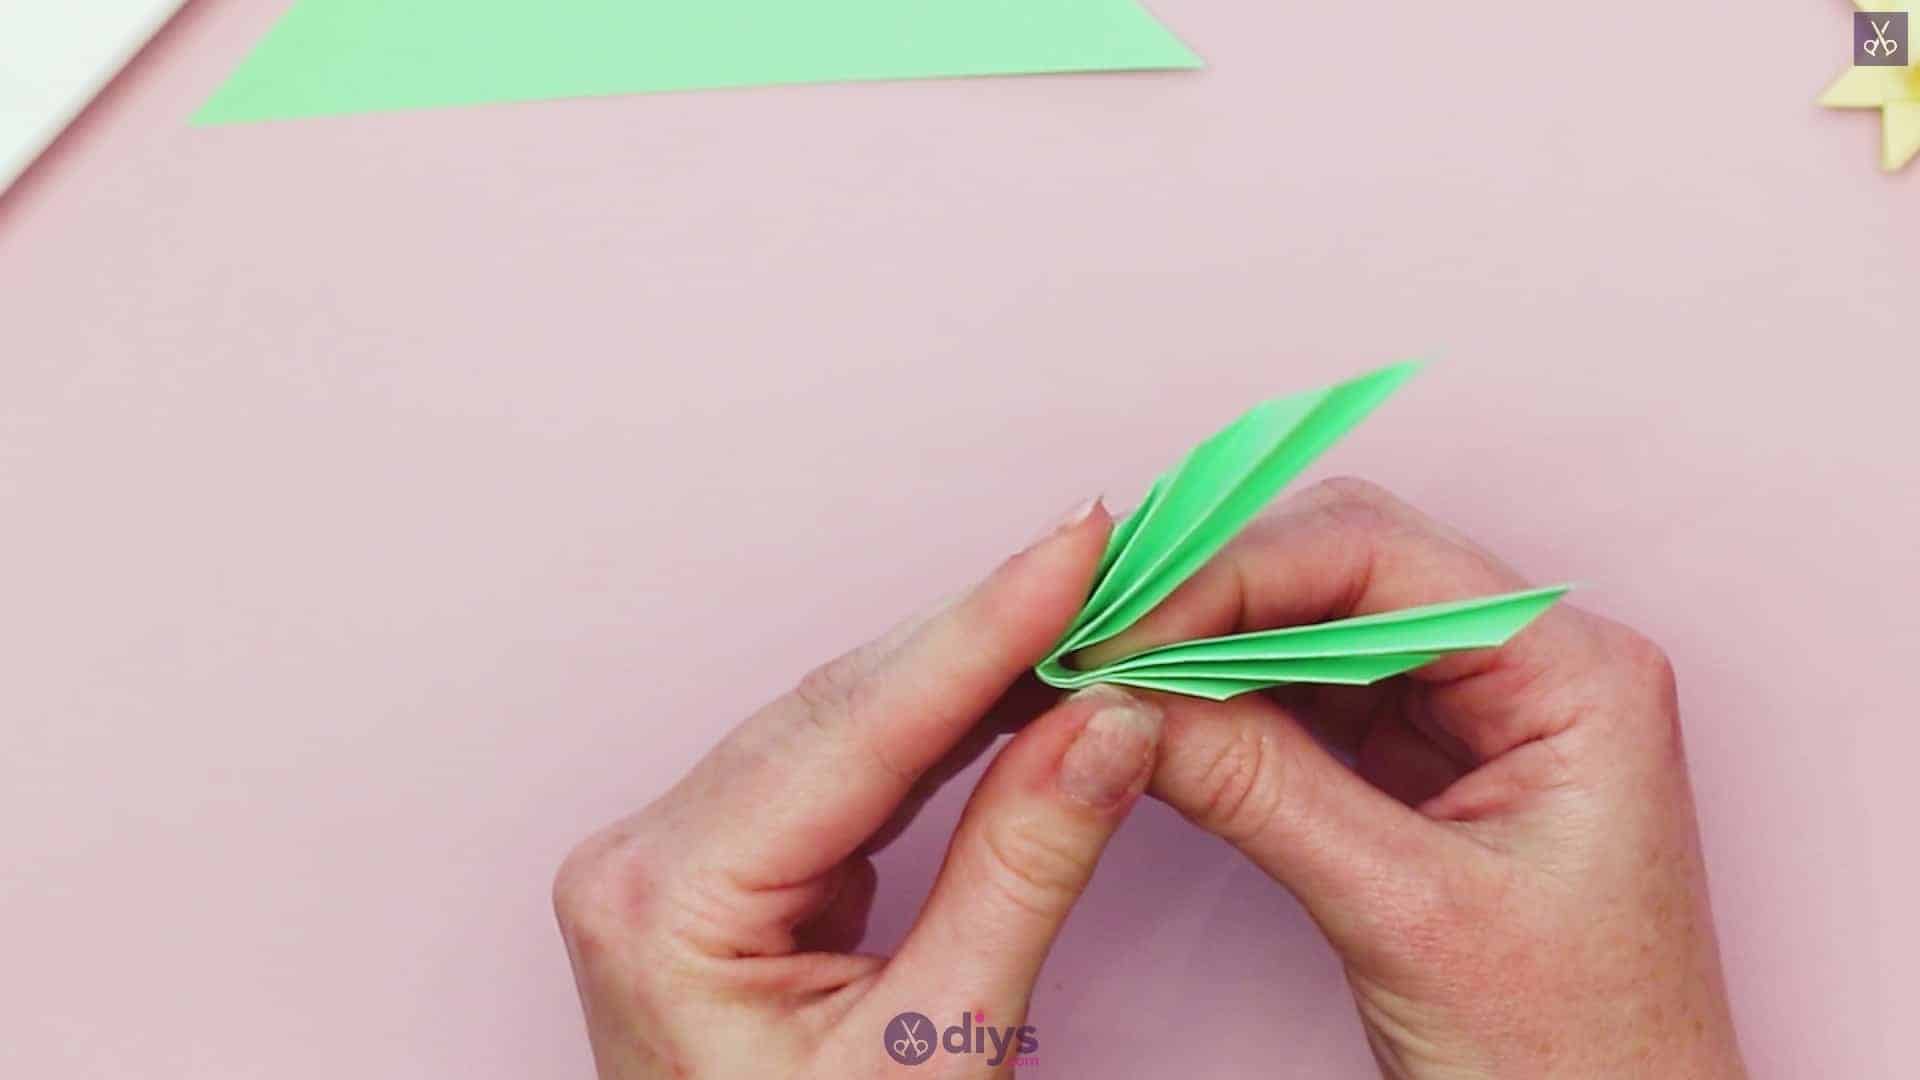 Diy origami flower art step 11b